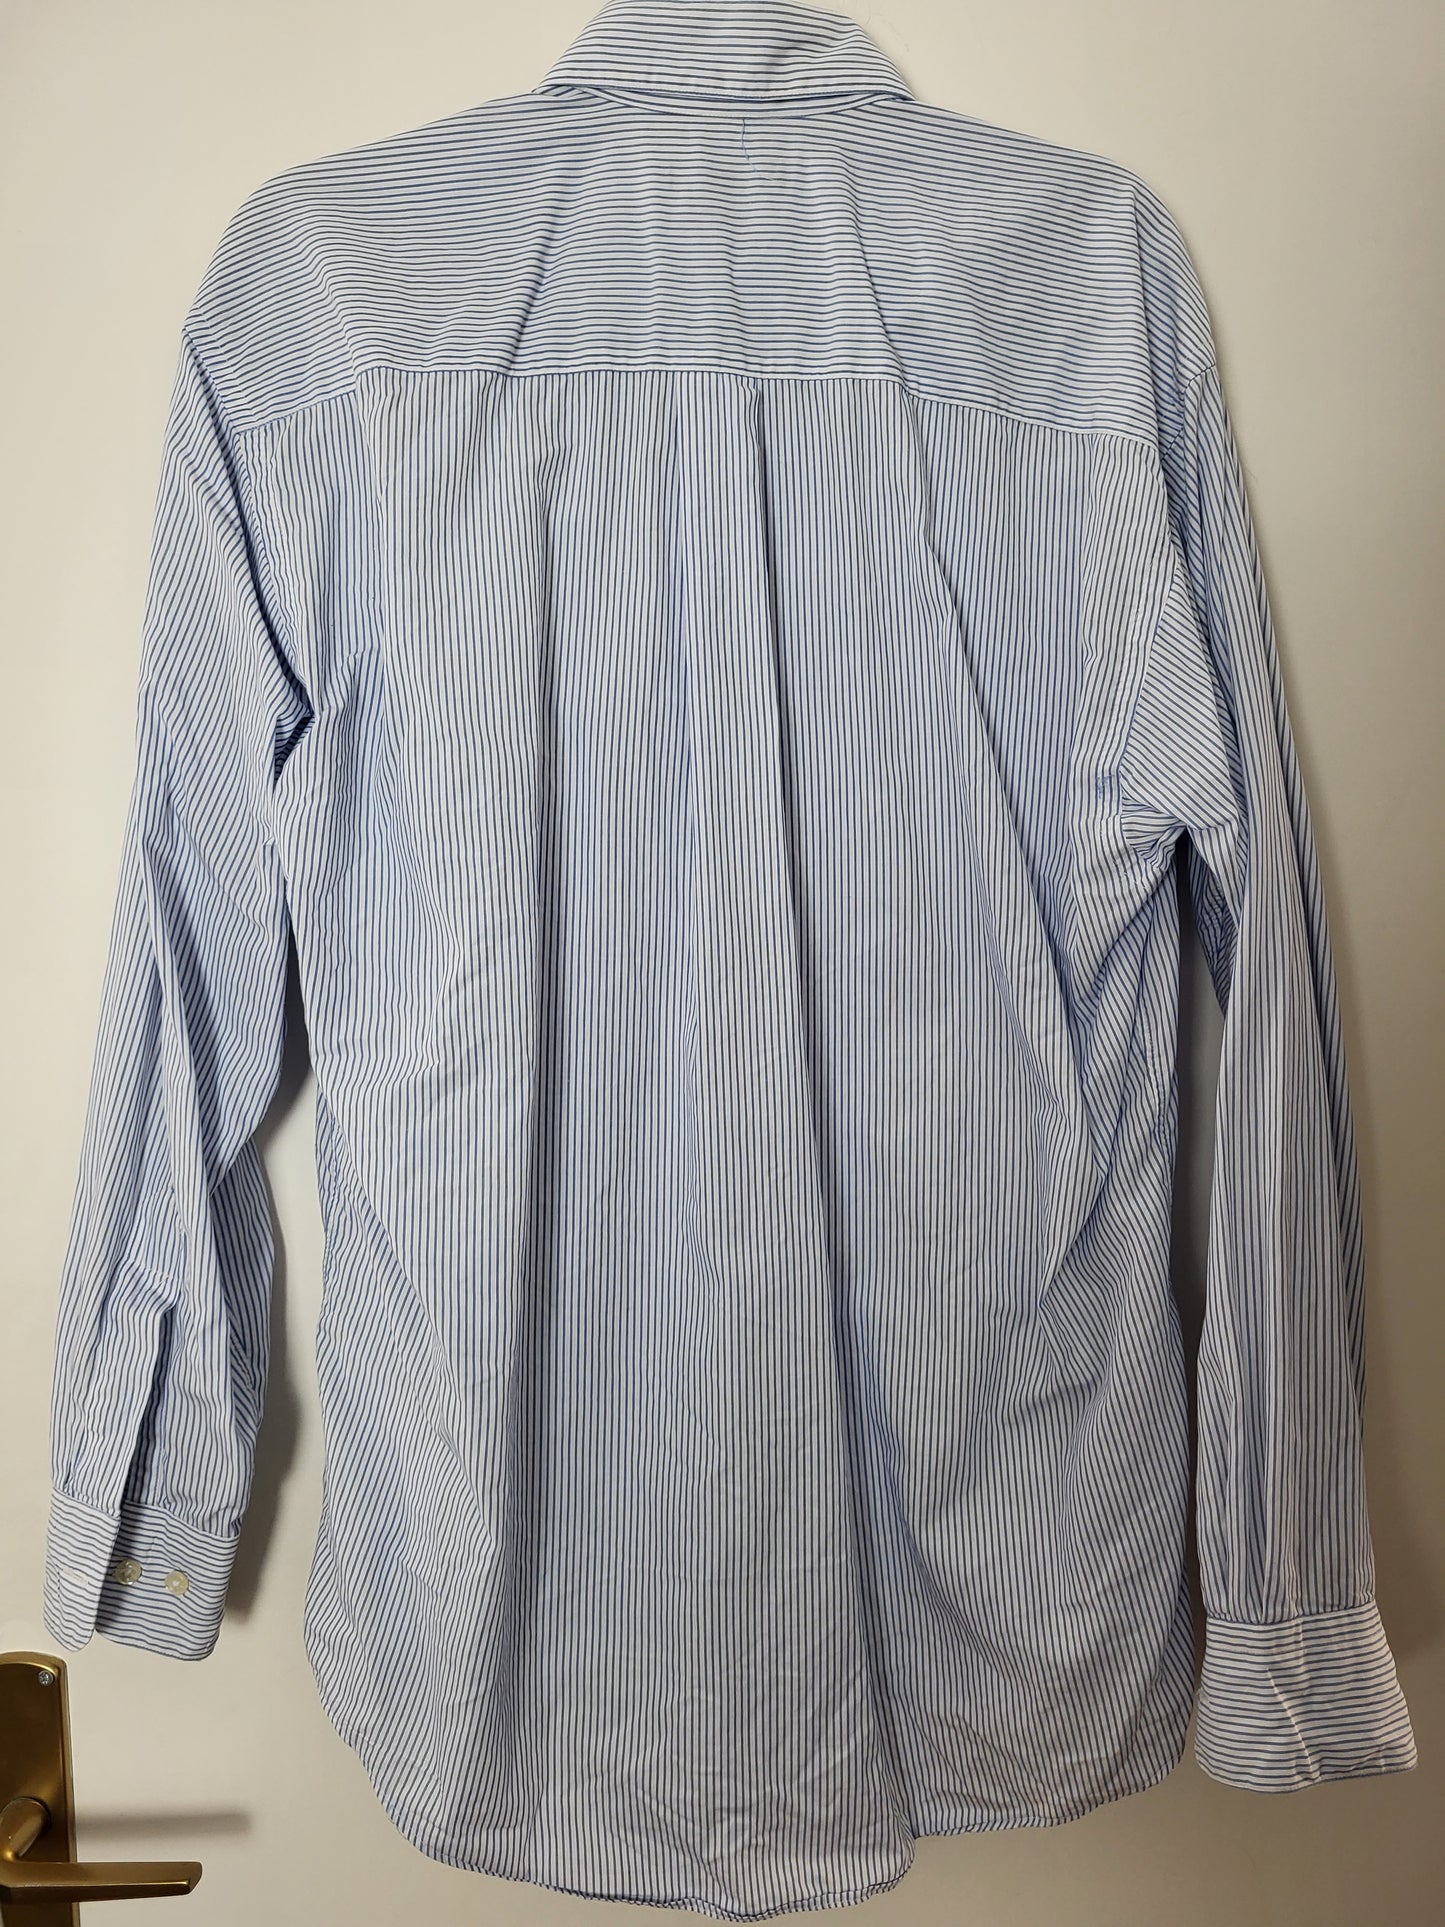 Burberry - Hemd - Streifen Muster - Vintage - Blau - Herren - M